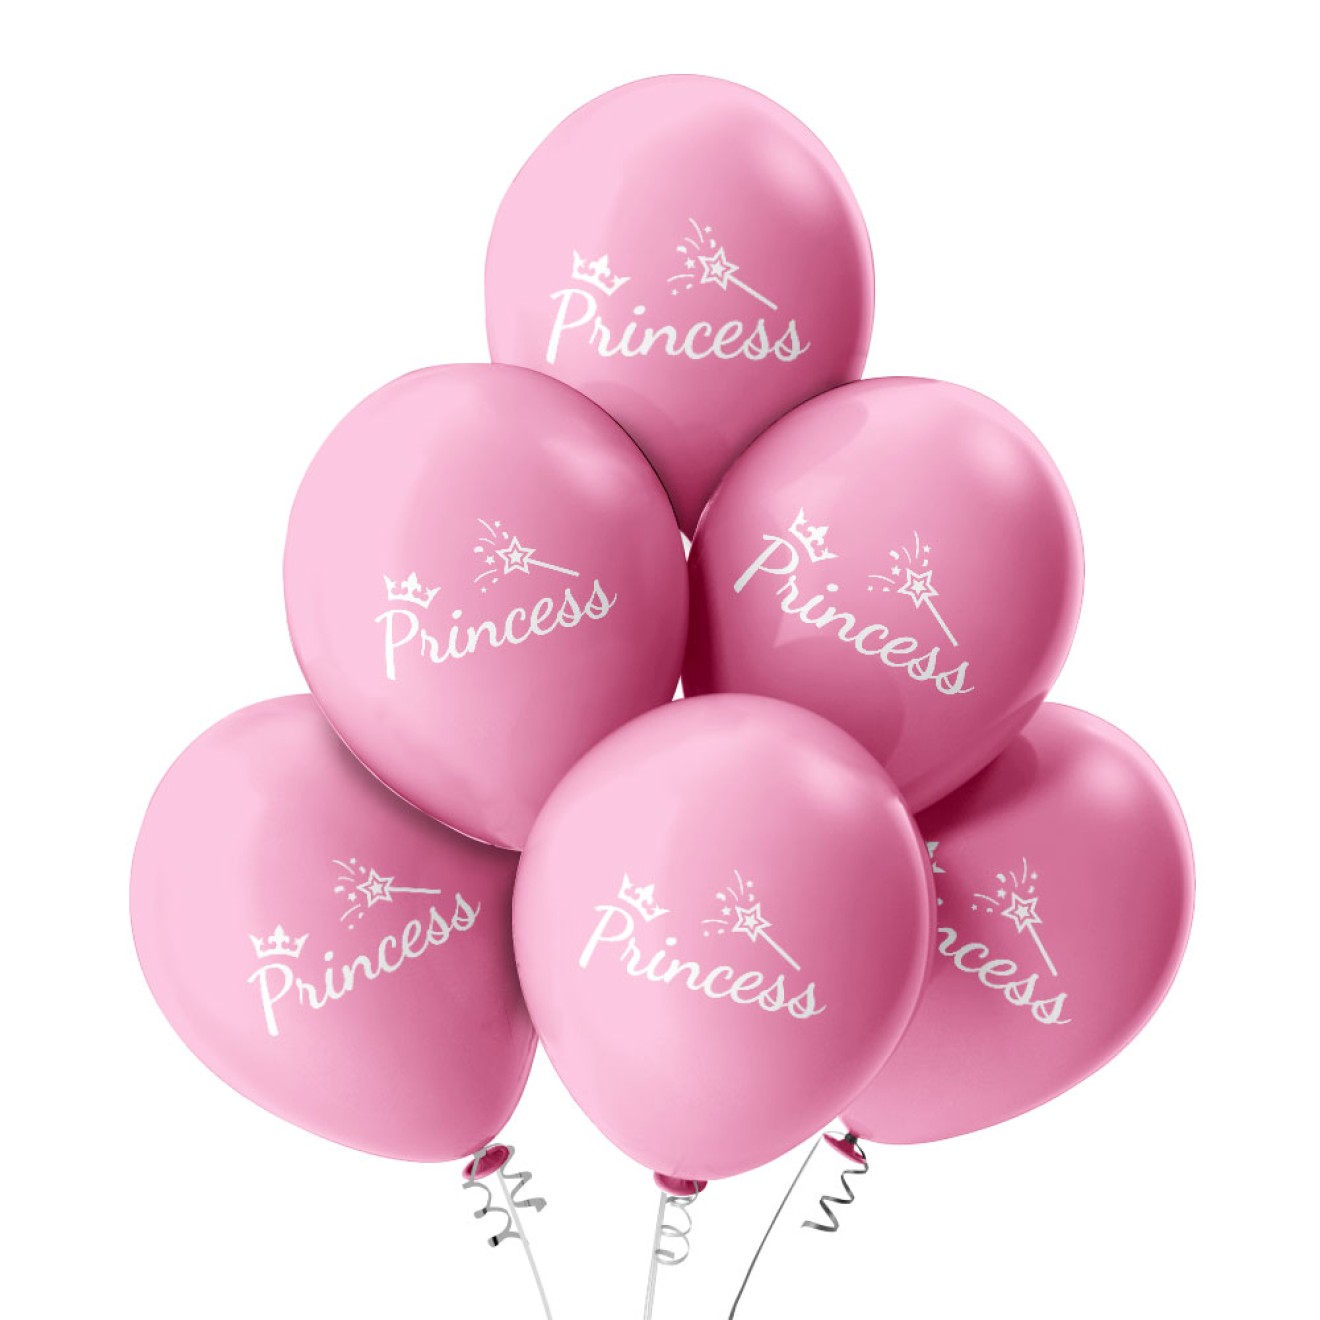 Luftballons: Princess (Zauberstab) - Freie Farbwahl